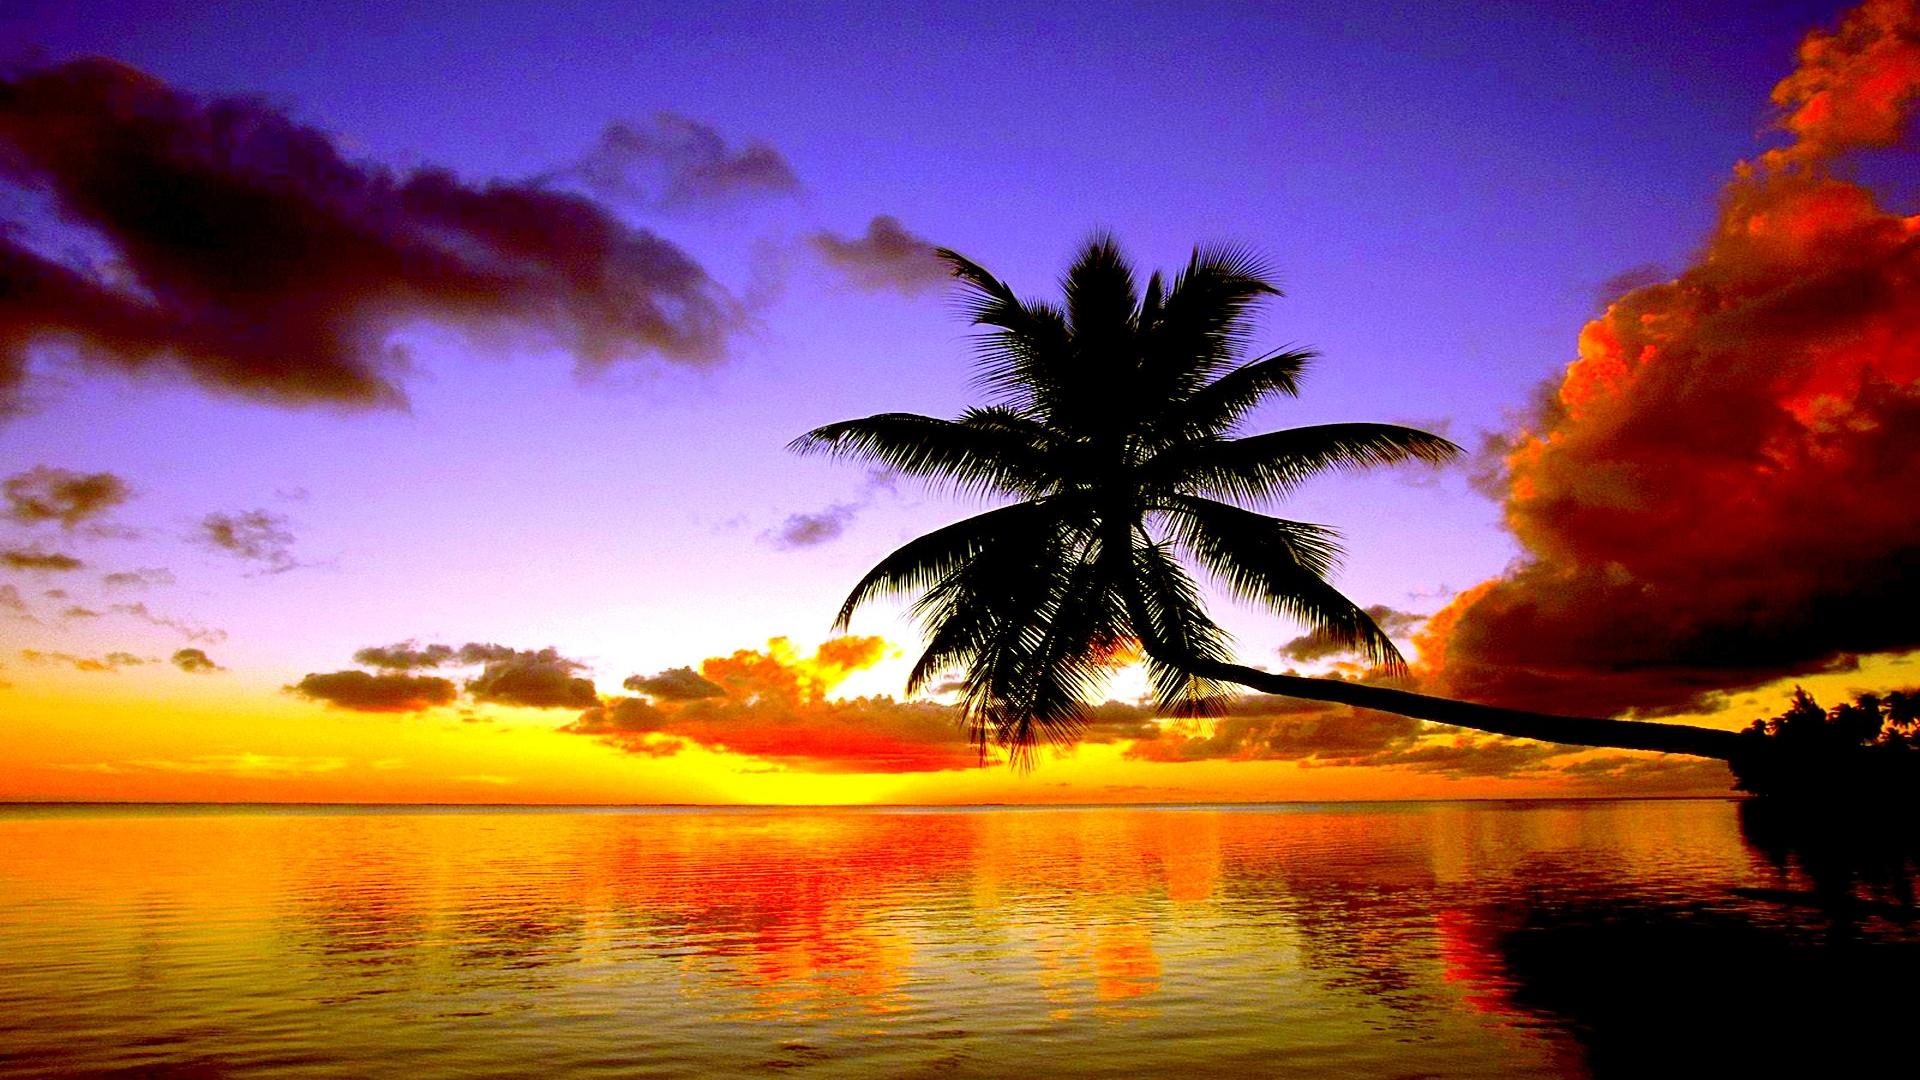 Coconut tree sunset wallpaper | (44912)